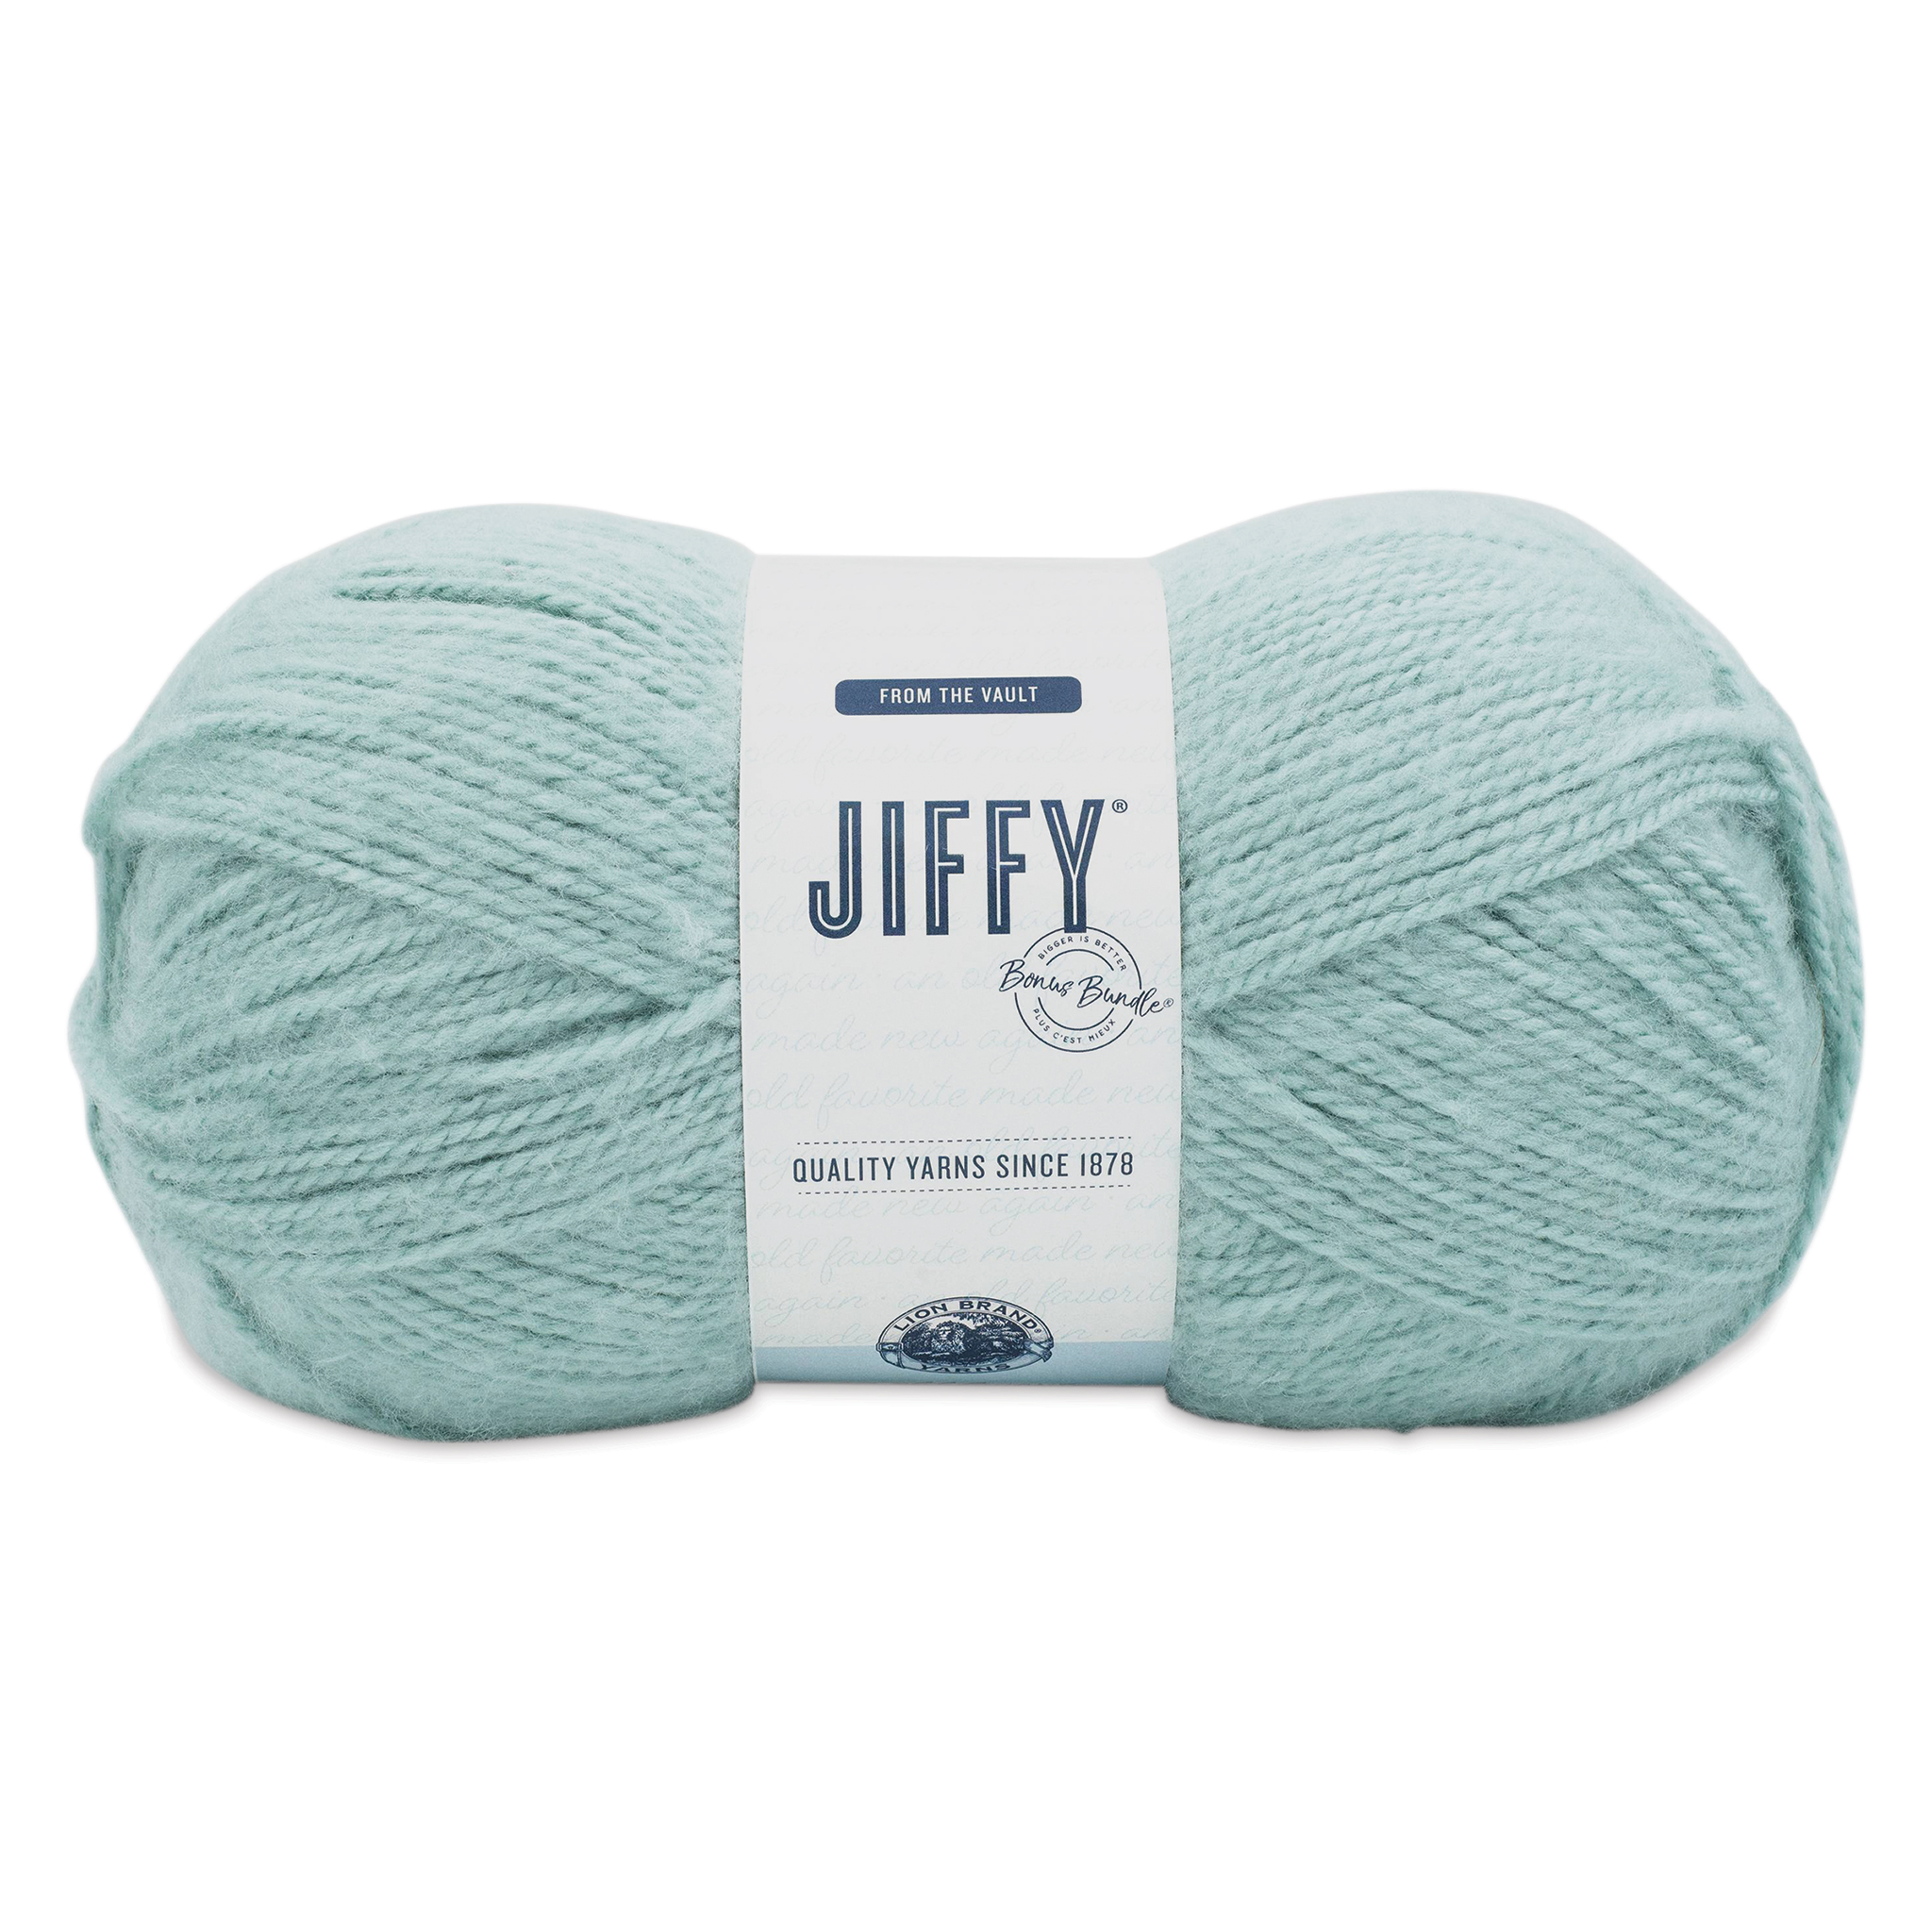 Jiffy Lion Brand Bulky Acrylic Yarn - 1 Skein Color Camel #124